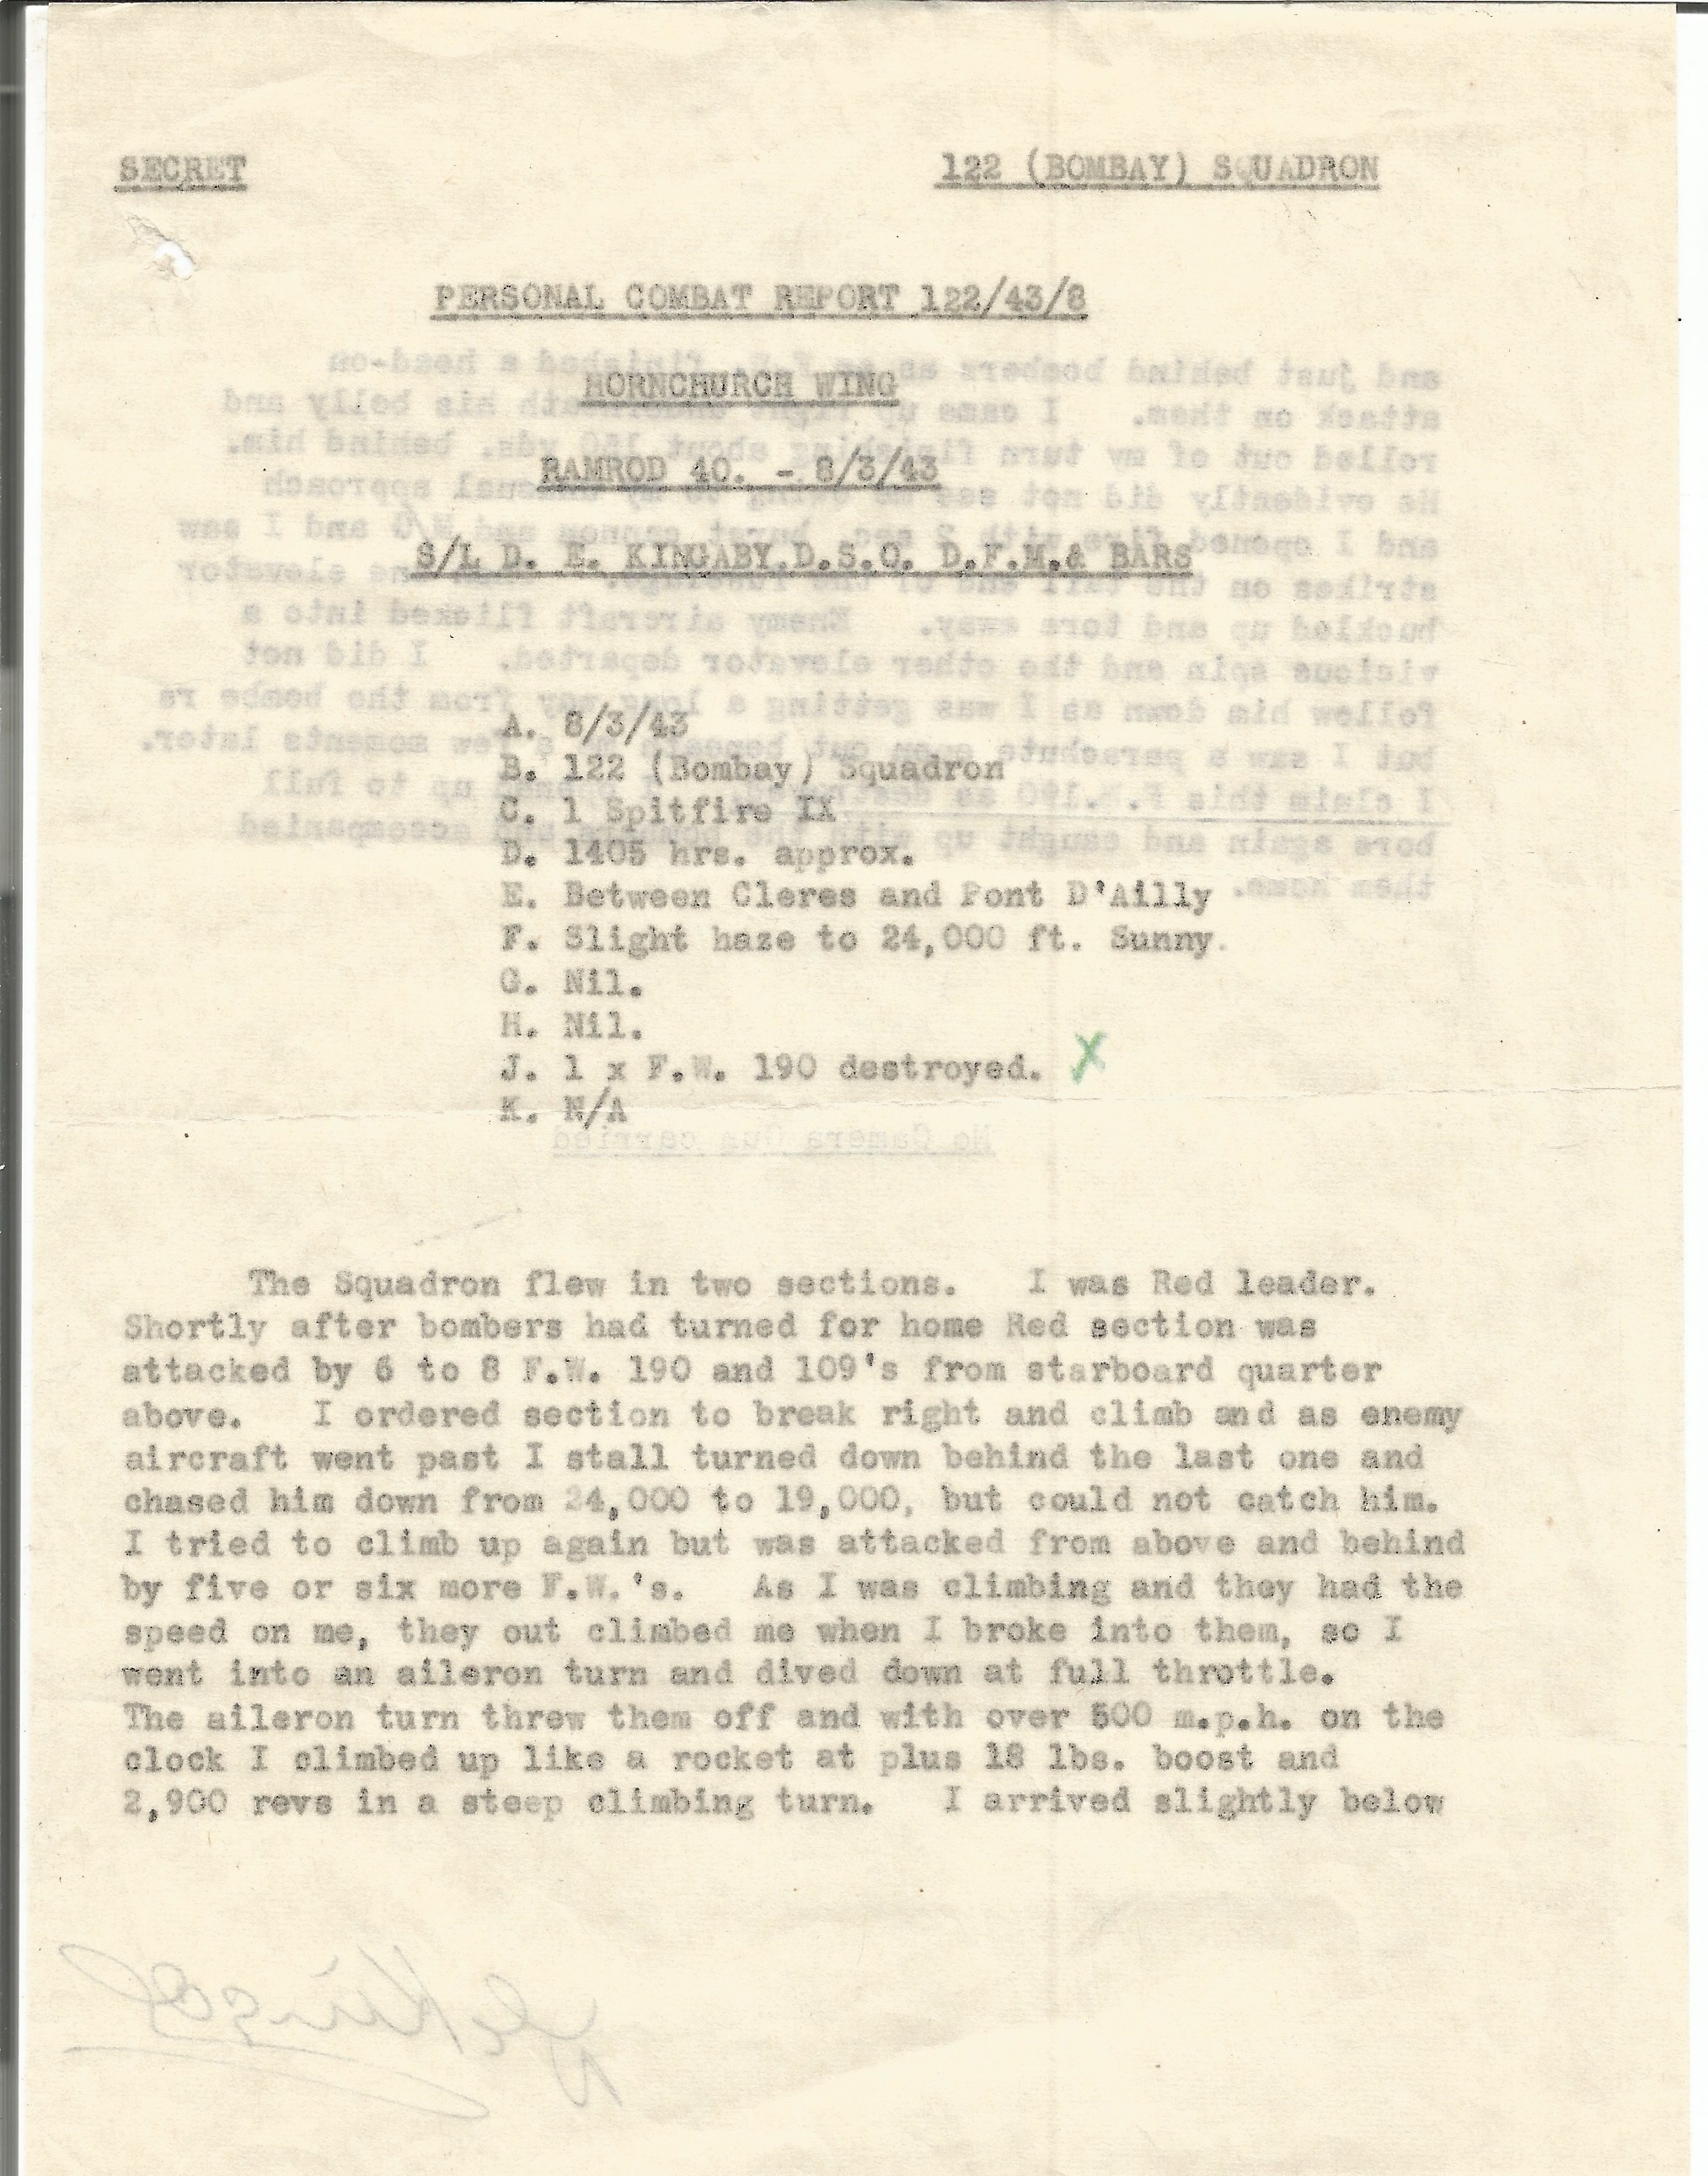 Wing Commander Donald Kingaby signed Original World War II personal combat report dated 8/3/43